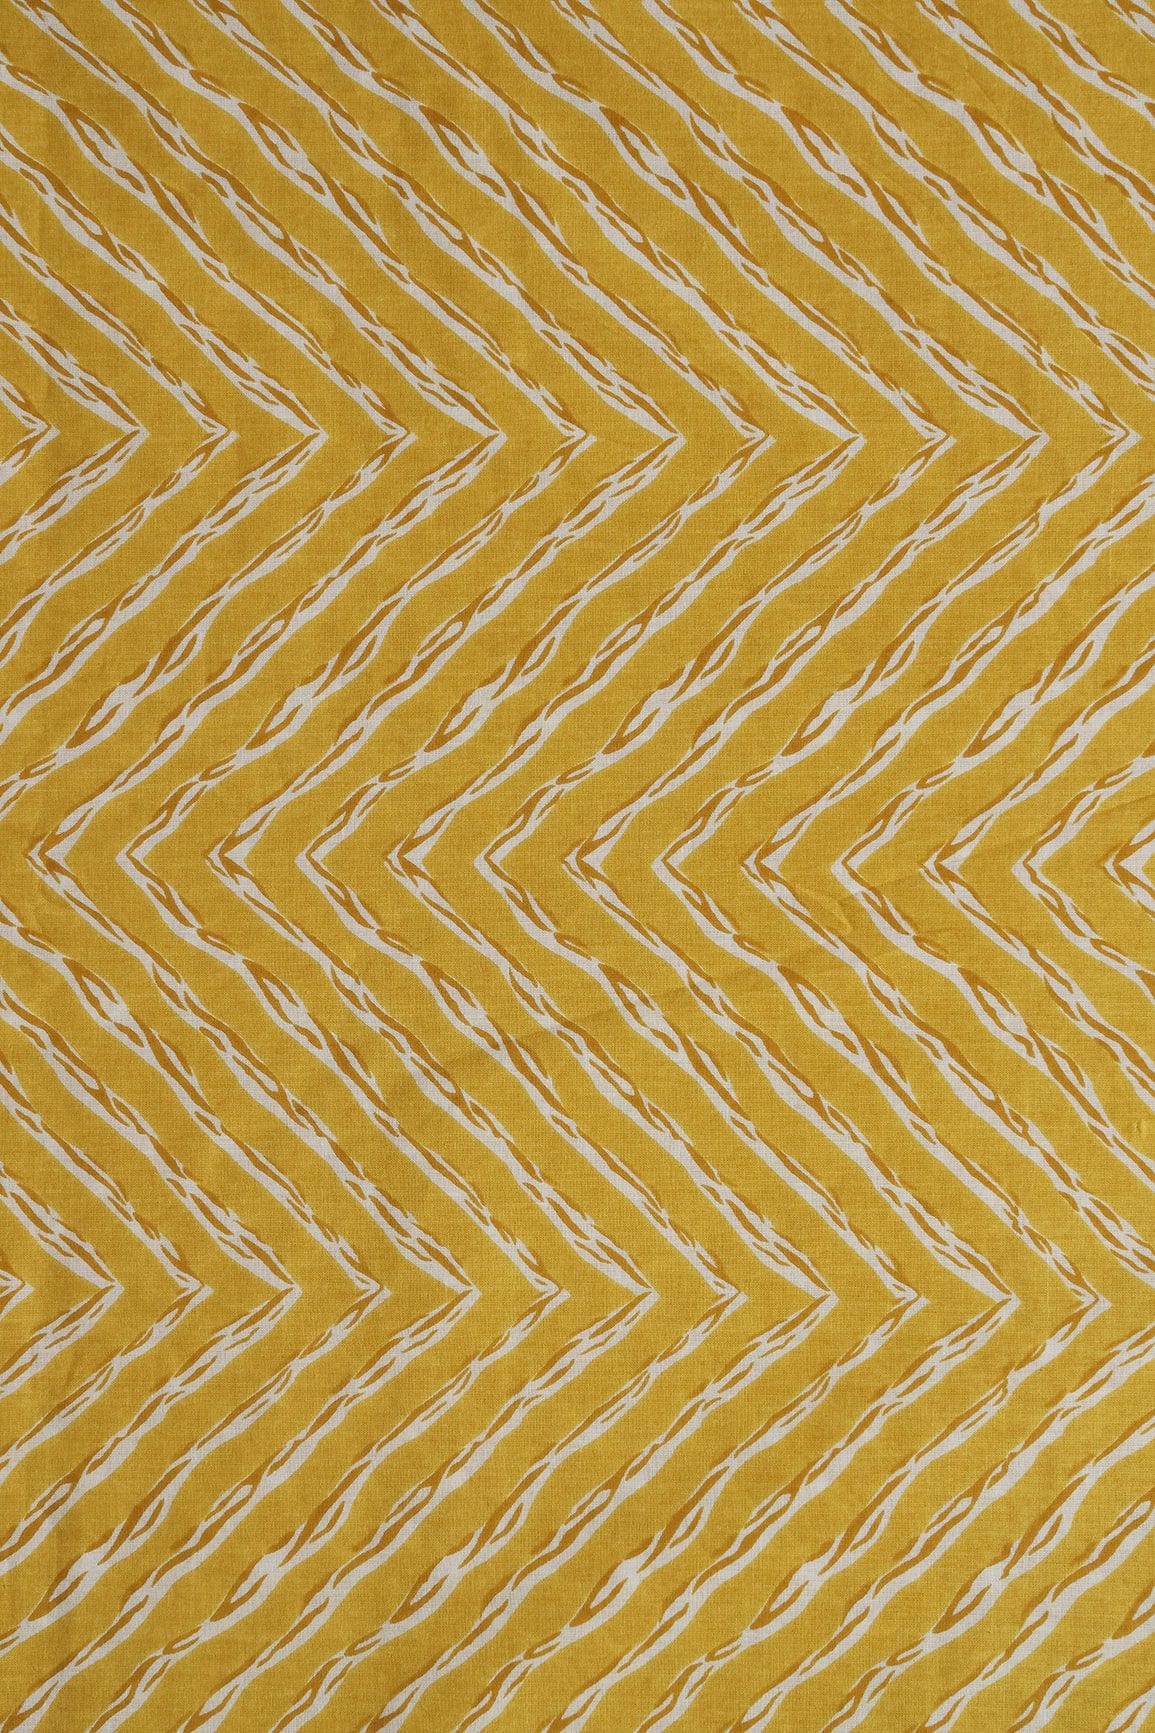 doeraa Prints Mustard And White Chevron Print On Pure Mul Cotton Fabric